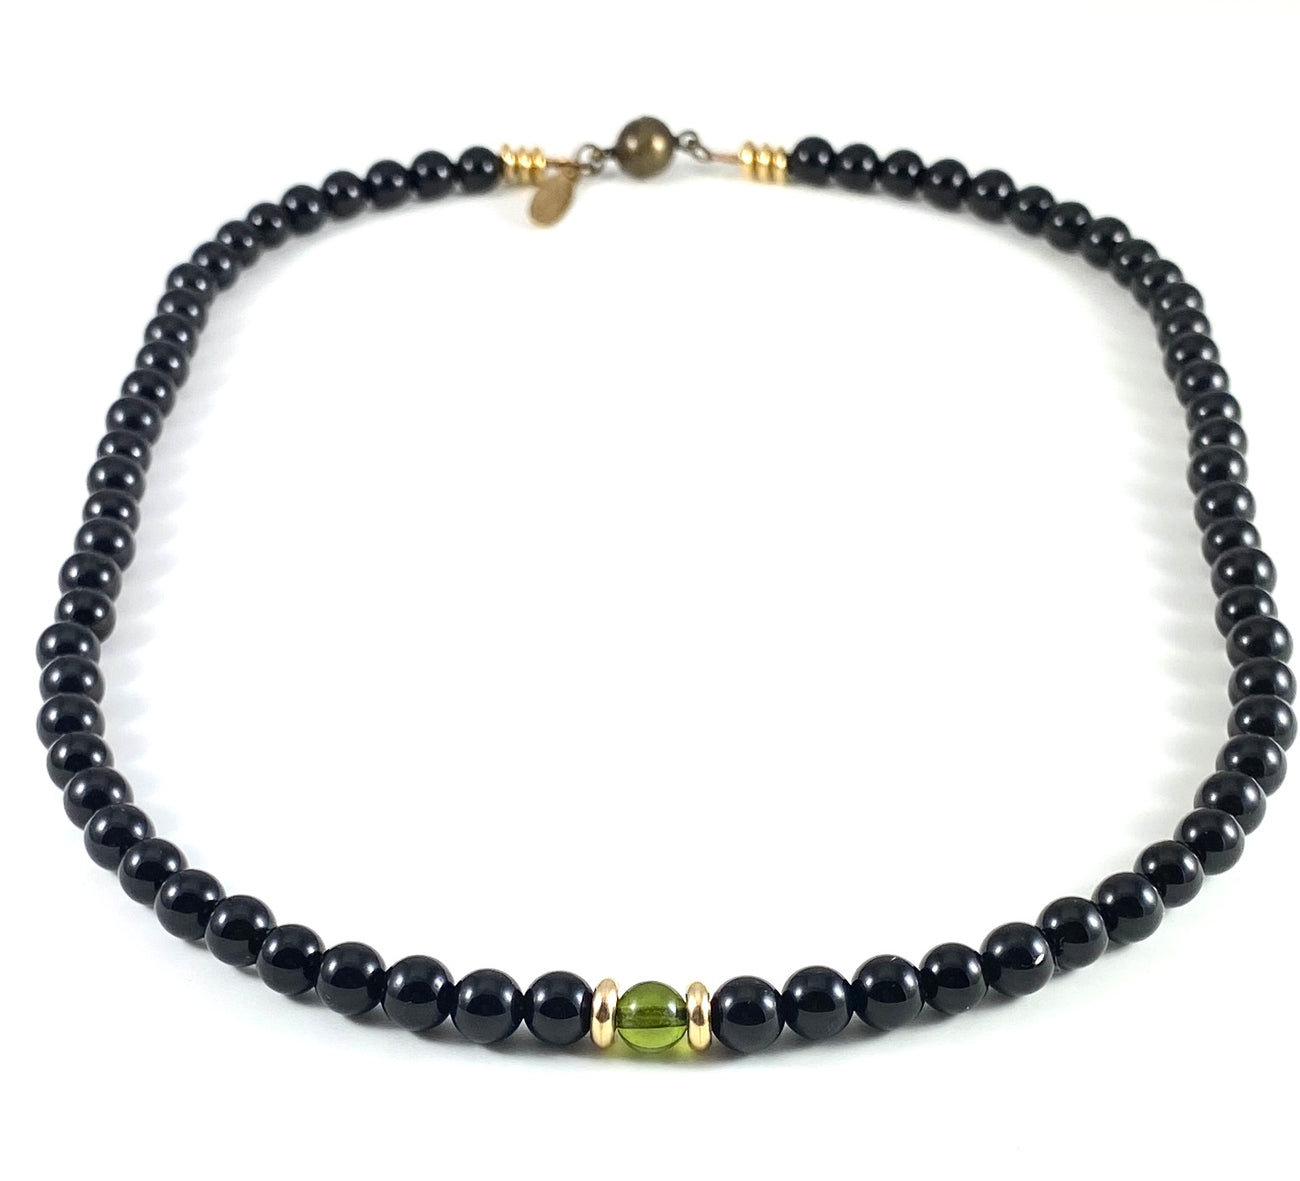 Moldavite Collar Necklace - 6mm